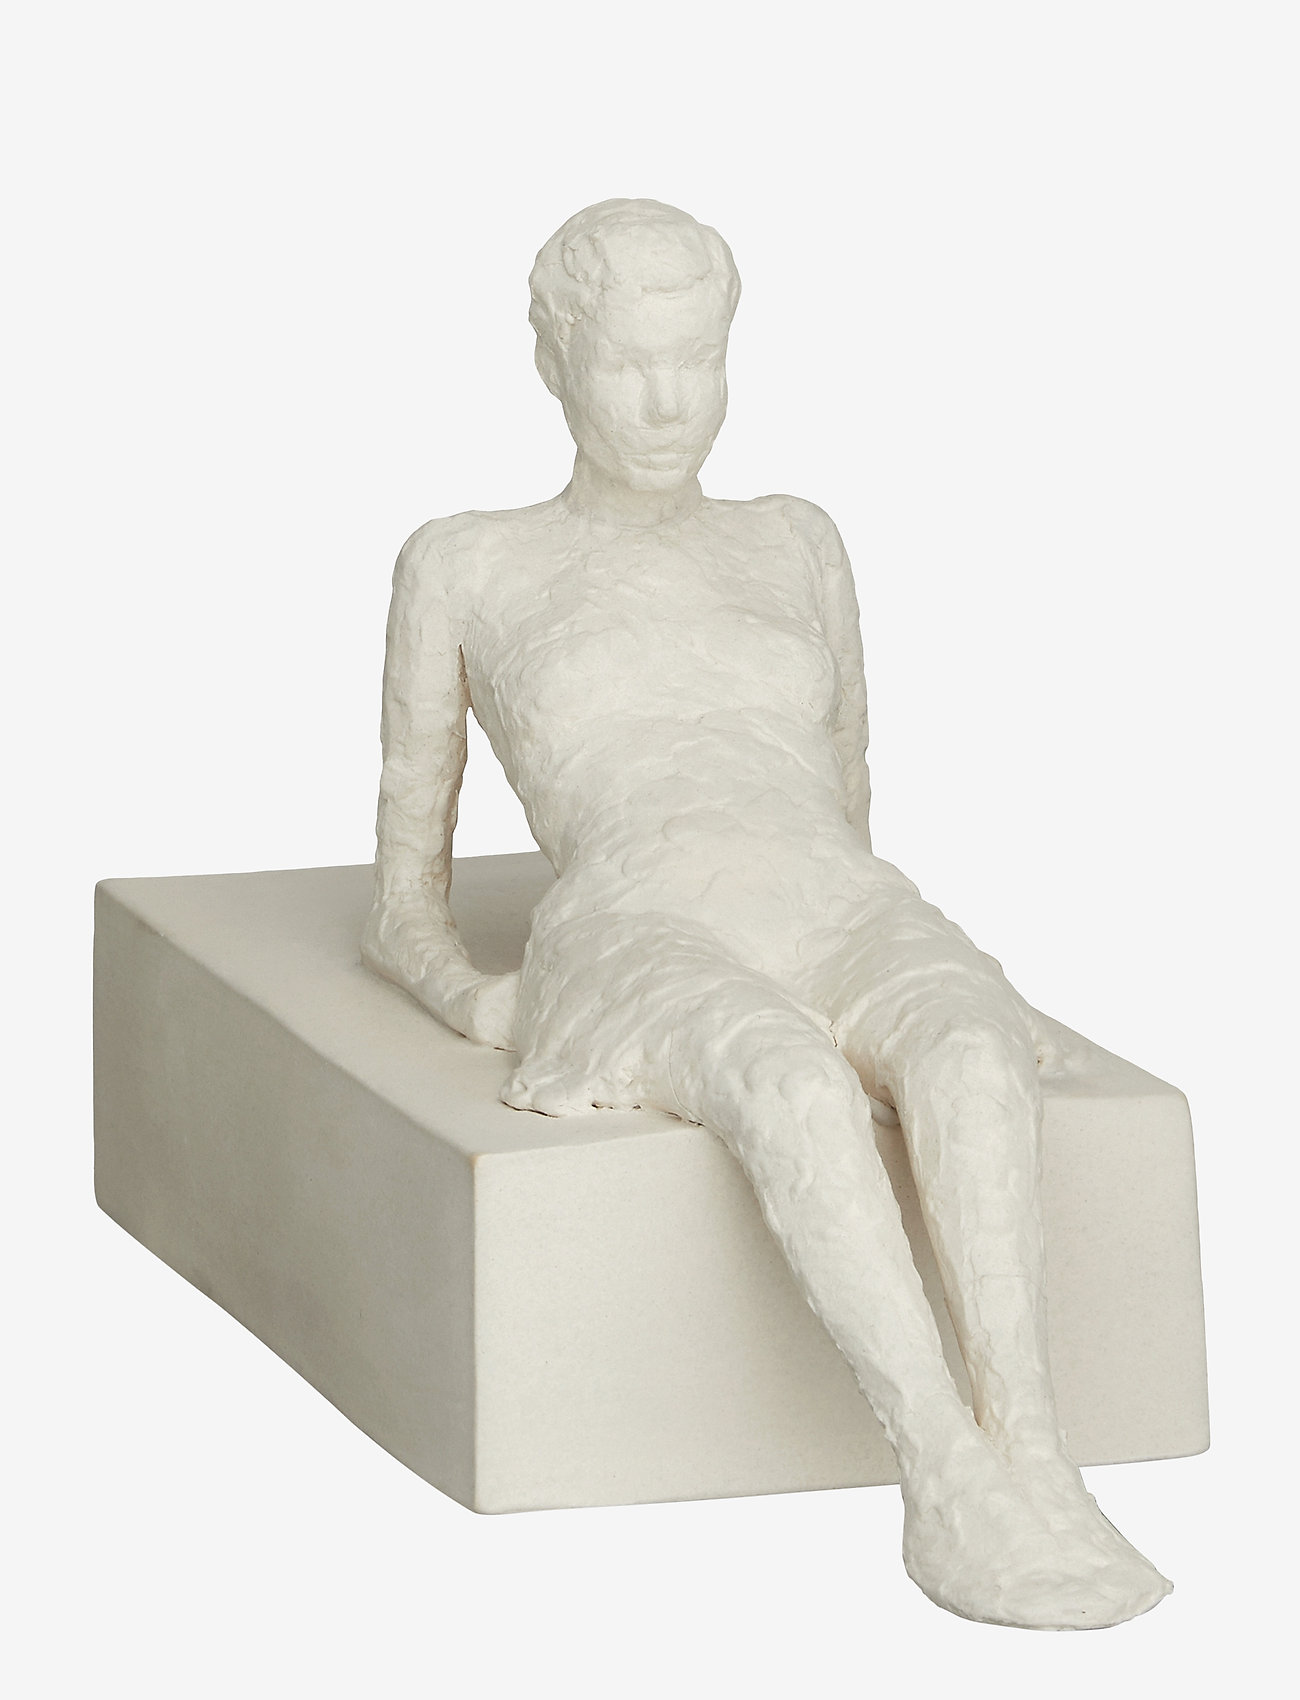 Kähler - Character The Attentive One H13 - porcelain figurines & sculptures - unglazed - 0